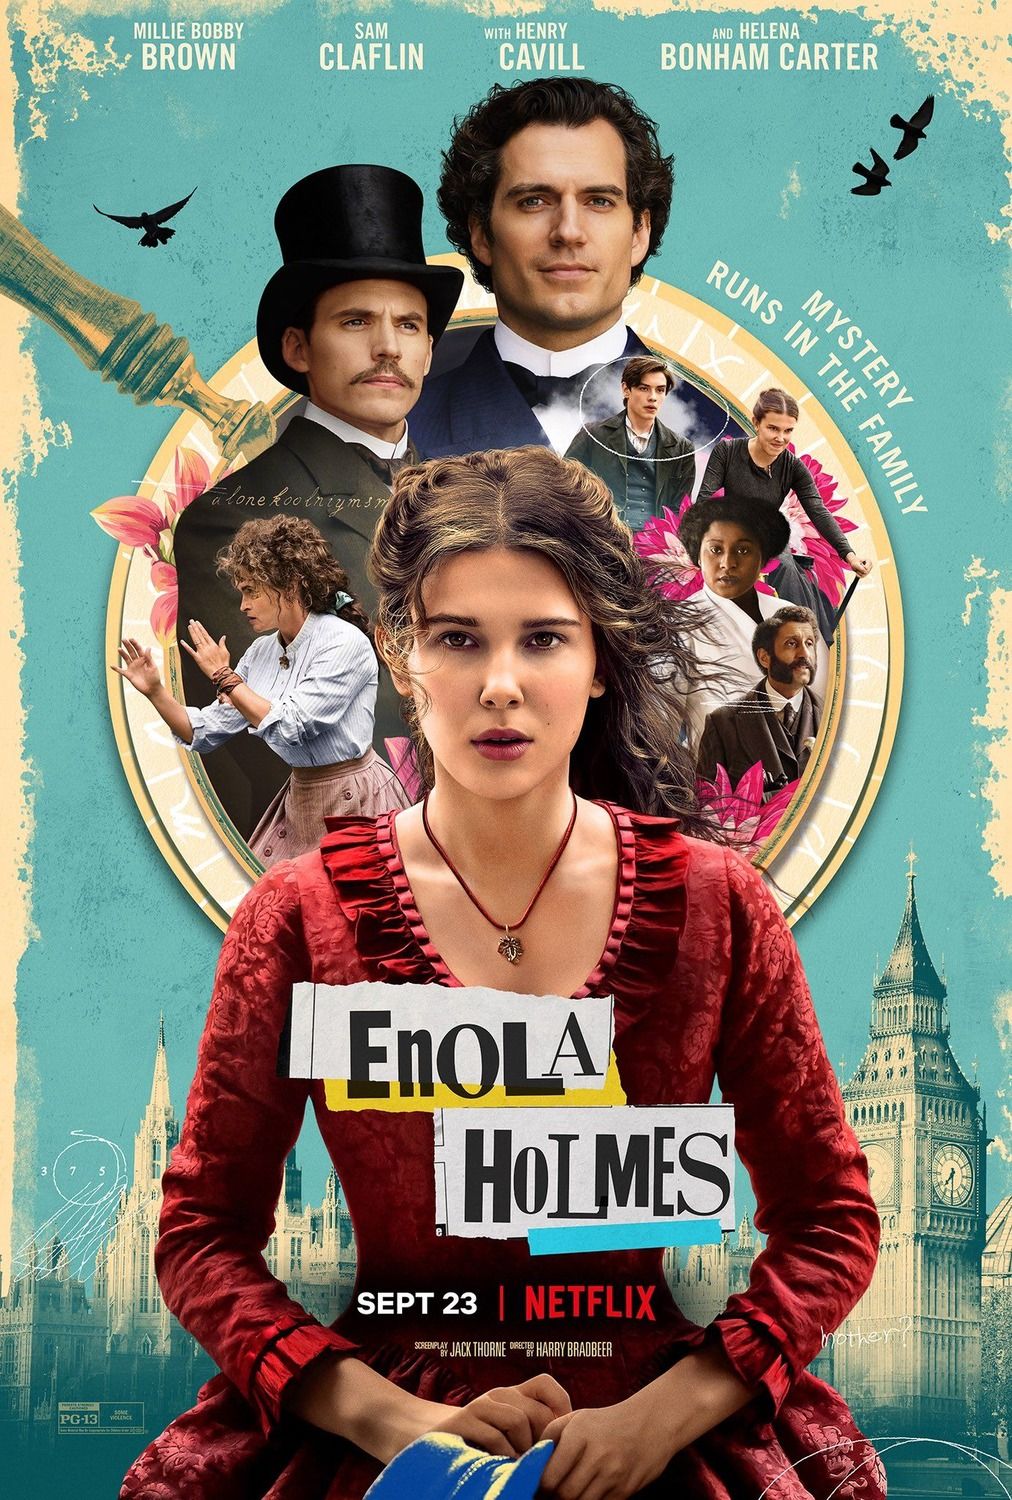 Enola Holmes (2020) Hindi Dubbed download full movie